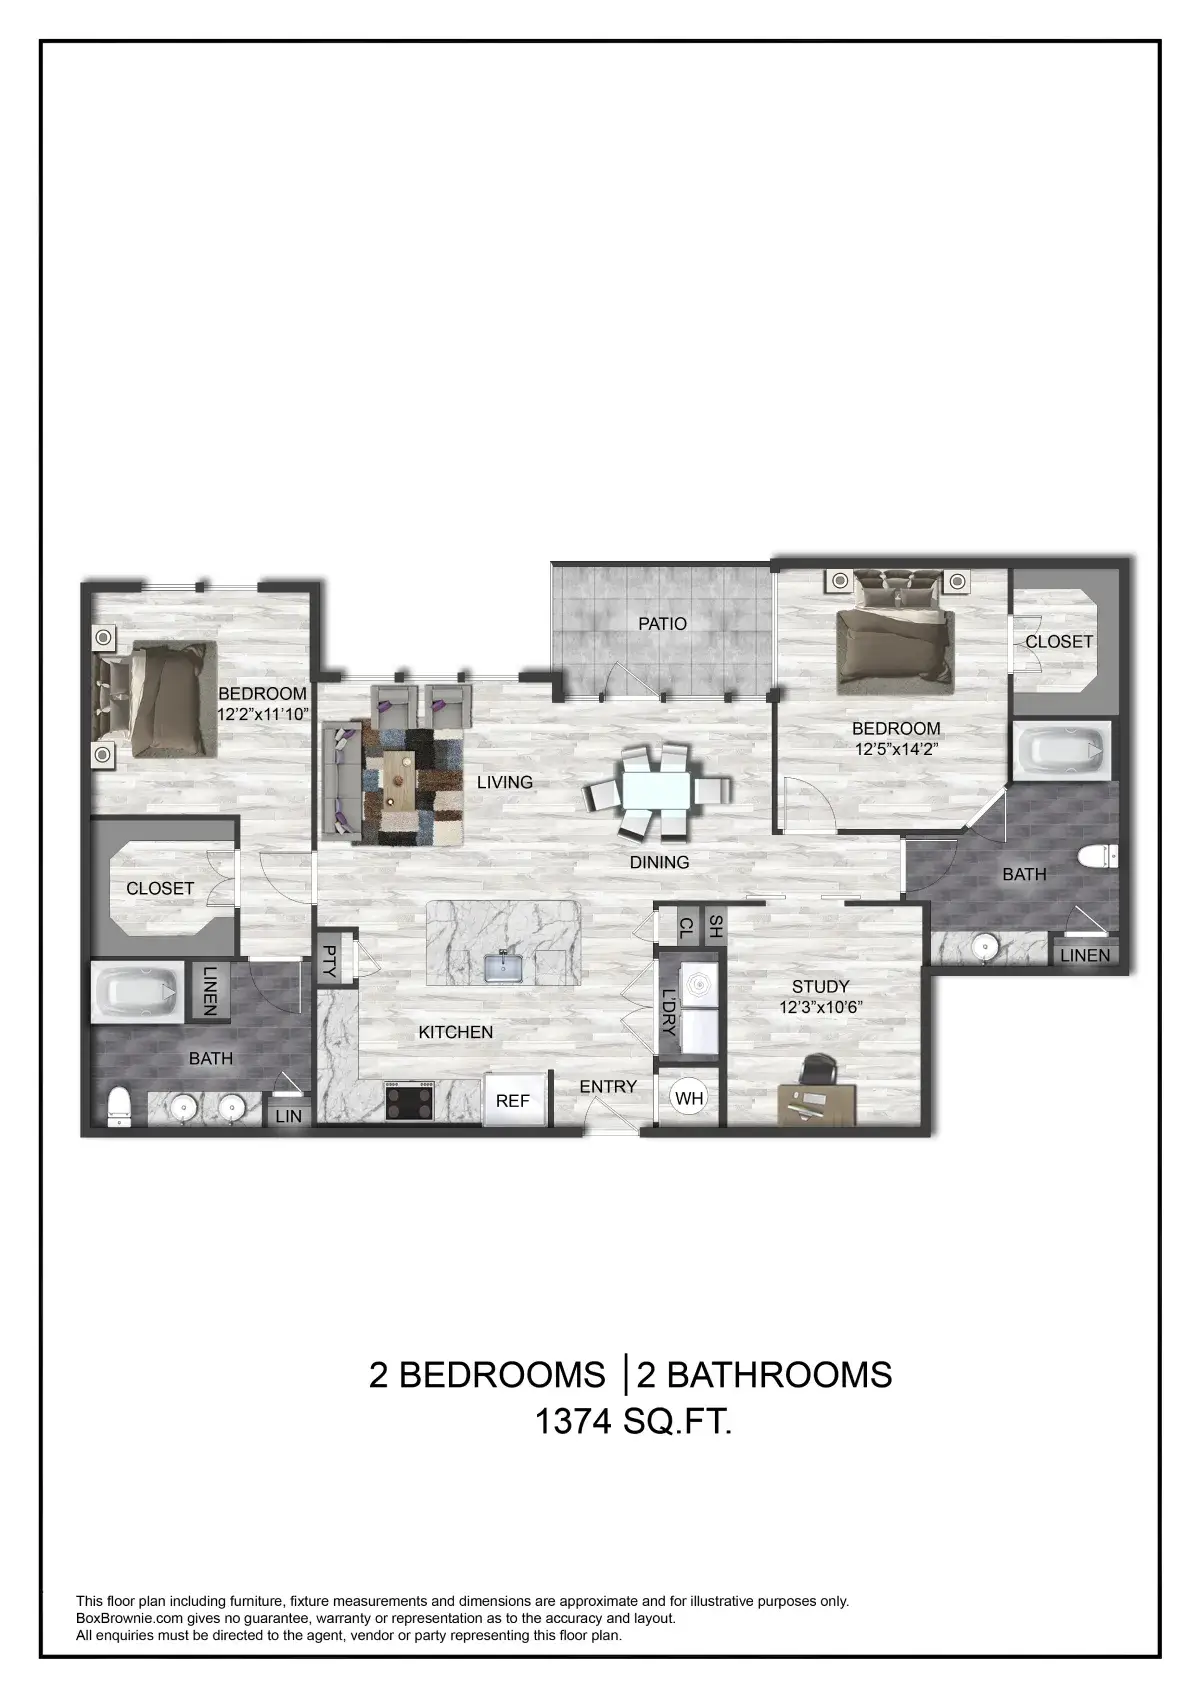 Sinclair houston apartment floorplan 9